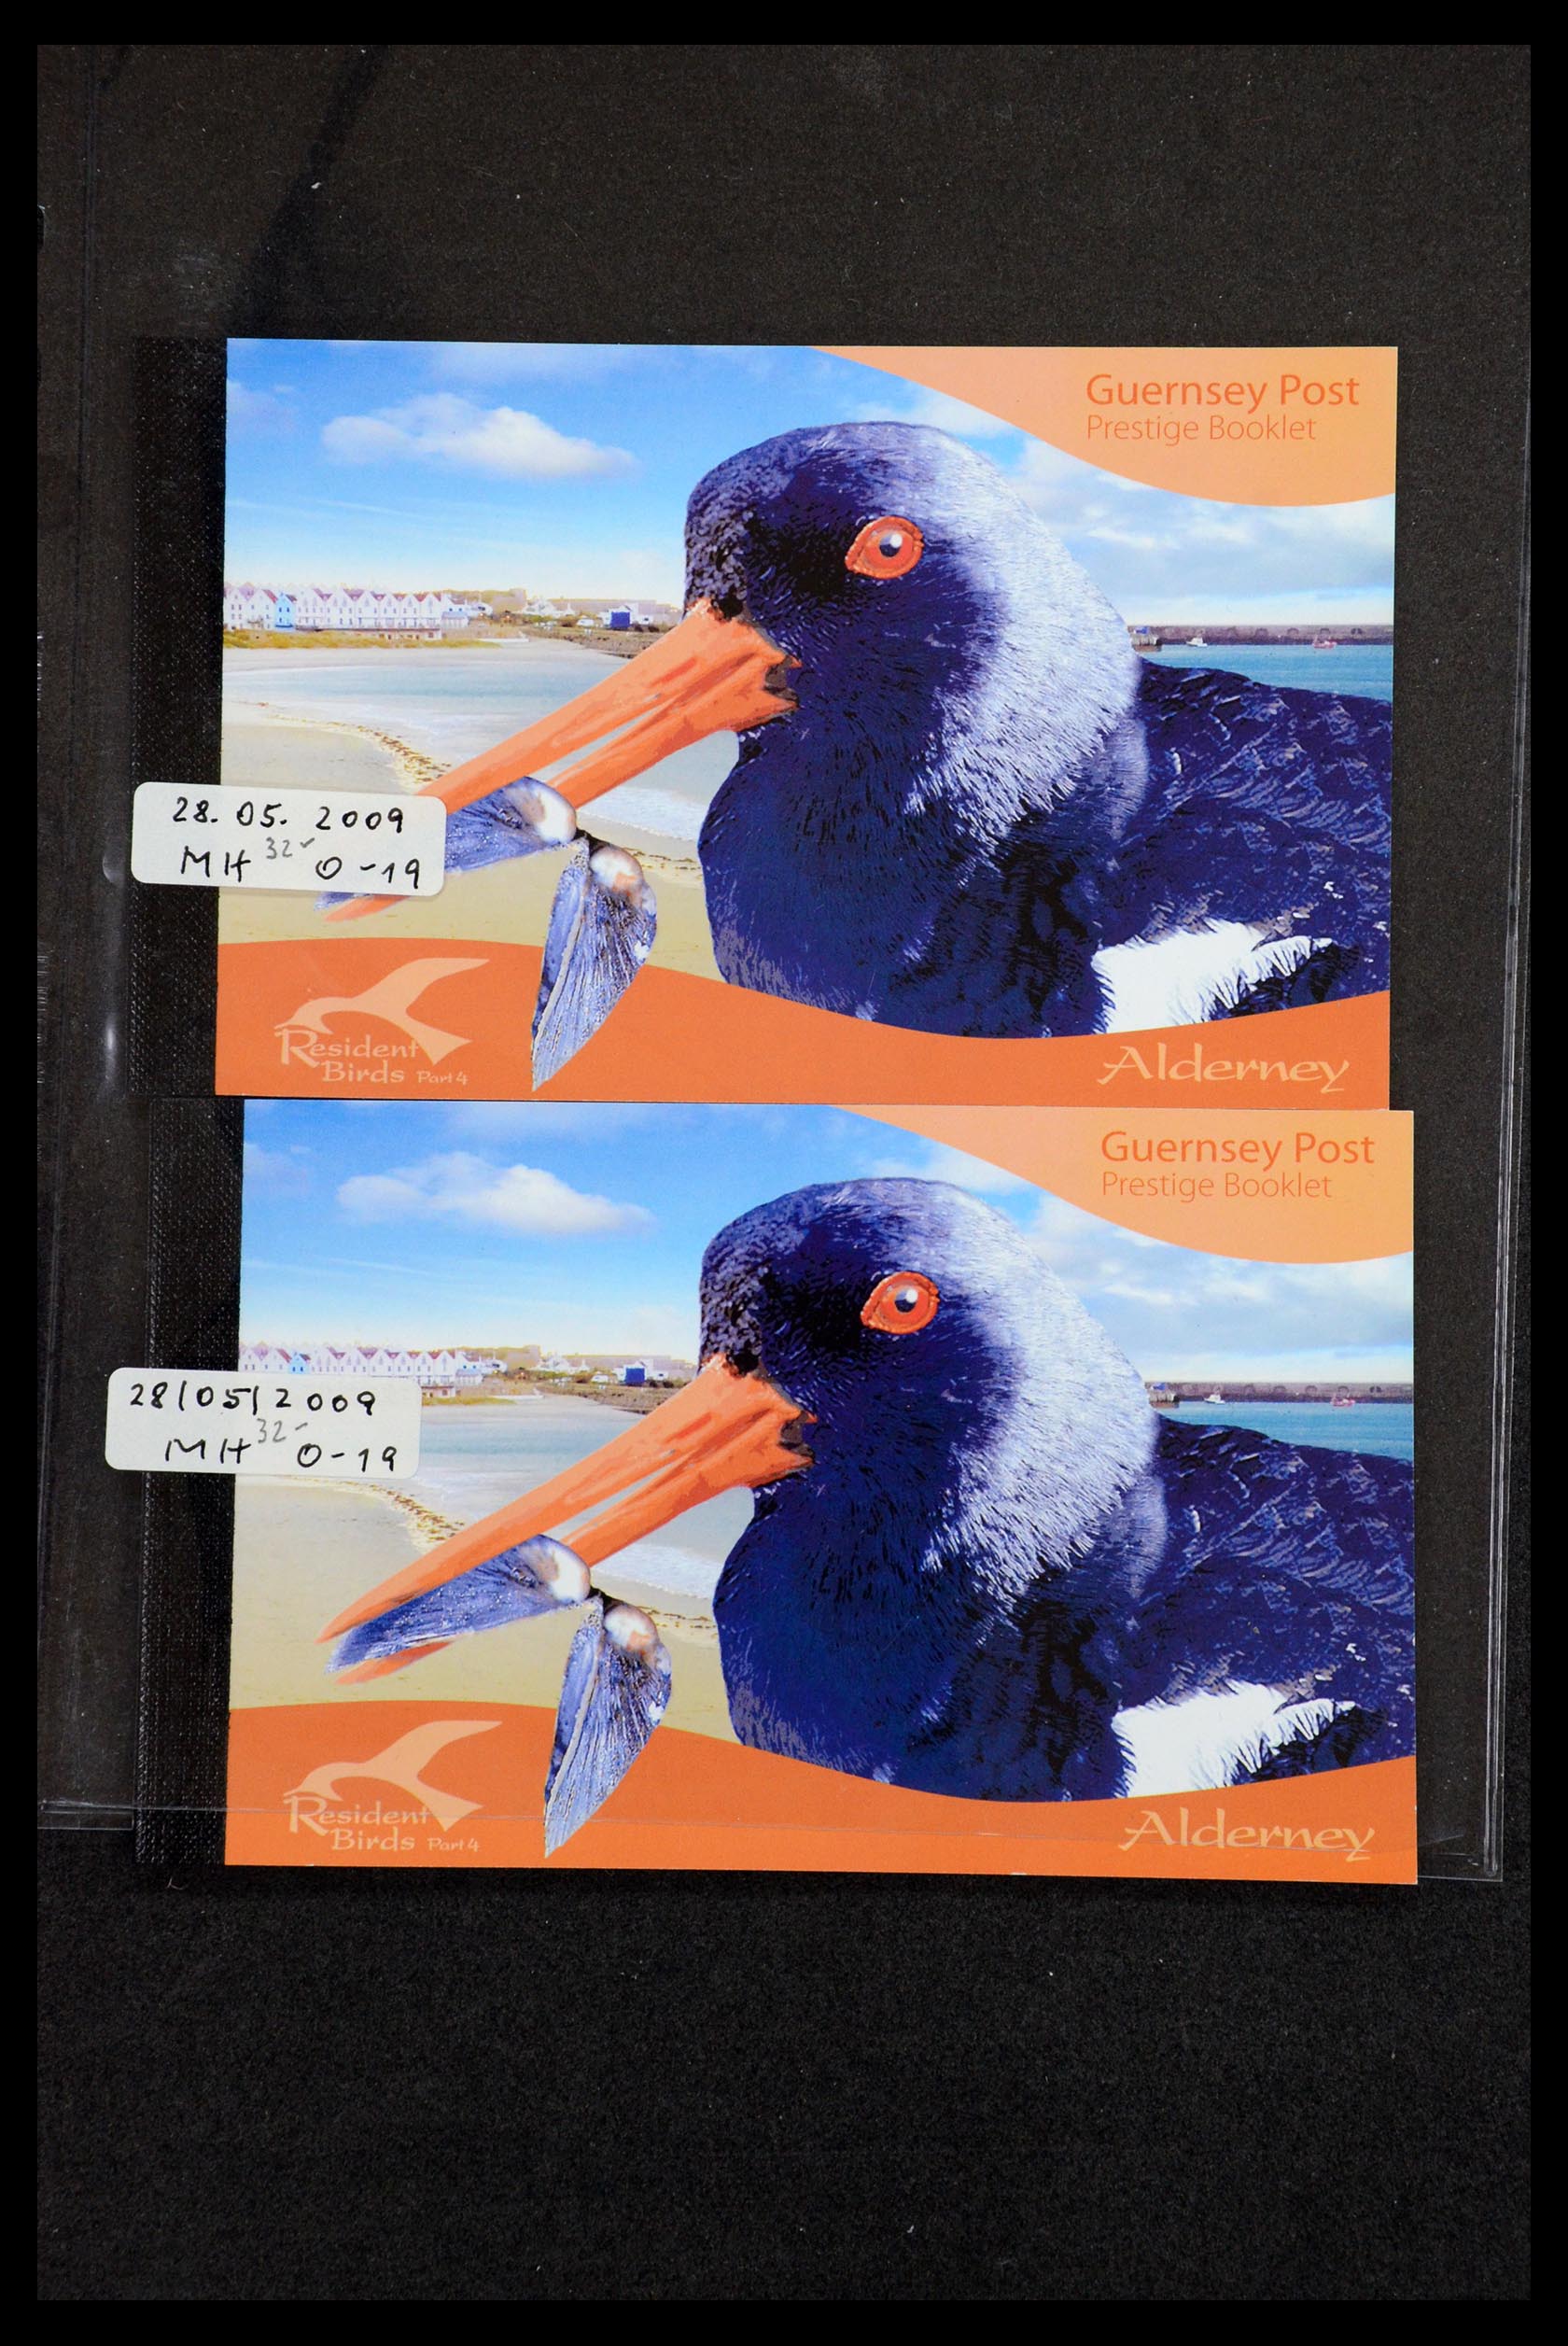 35976 051 - Stamp collection 35976 Guernsey and Alderney stamp booklets 1969-2015!